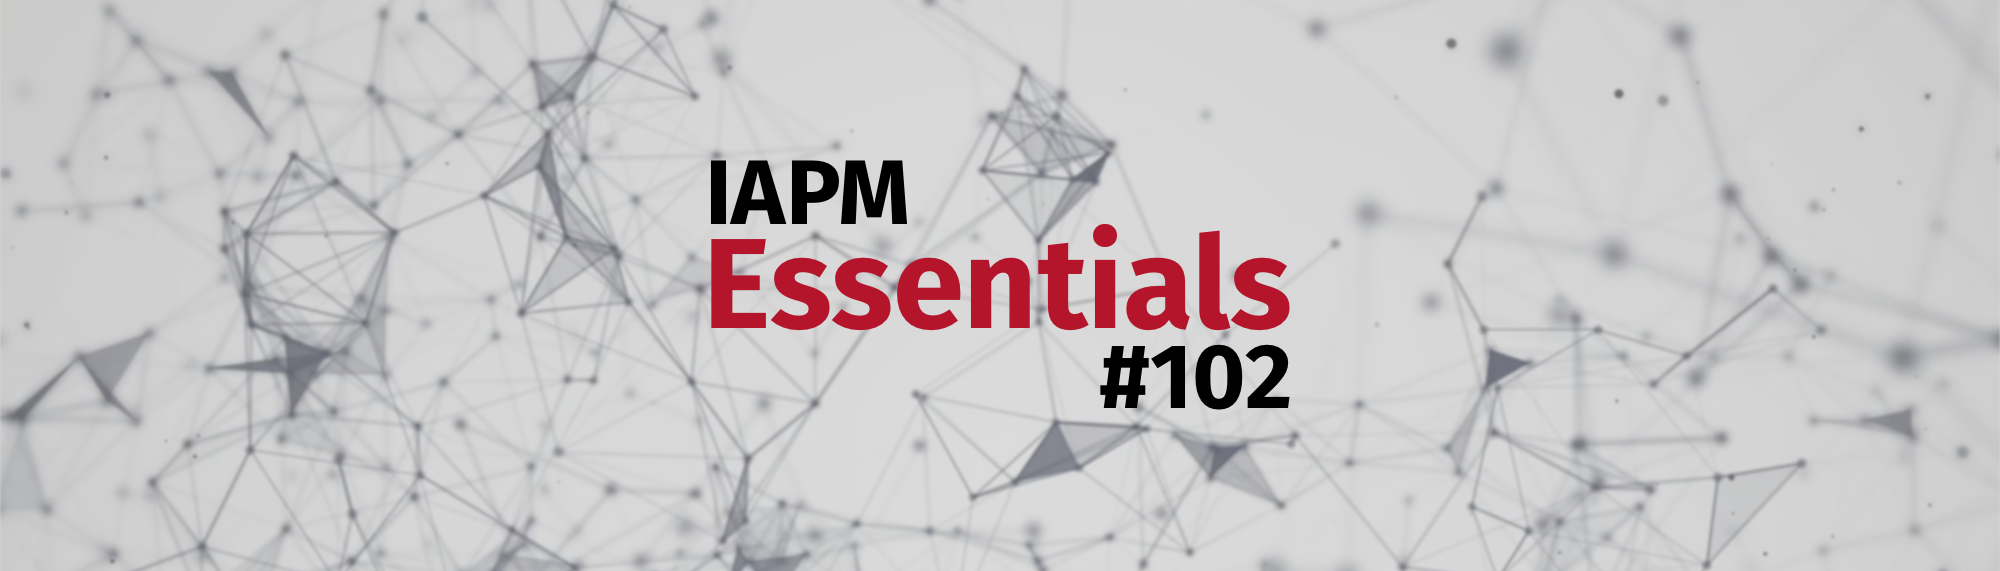 IAPM Essentials #102 - PM Neuigkeiten | IAPM